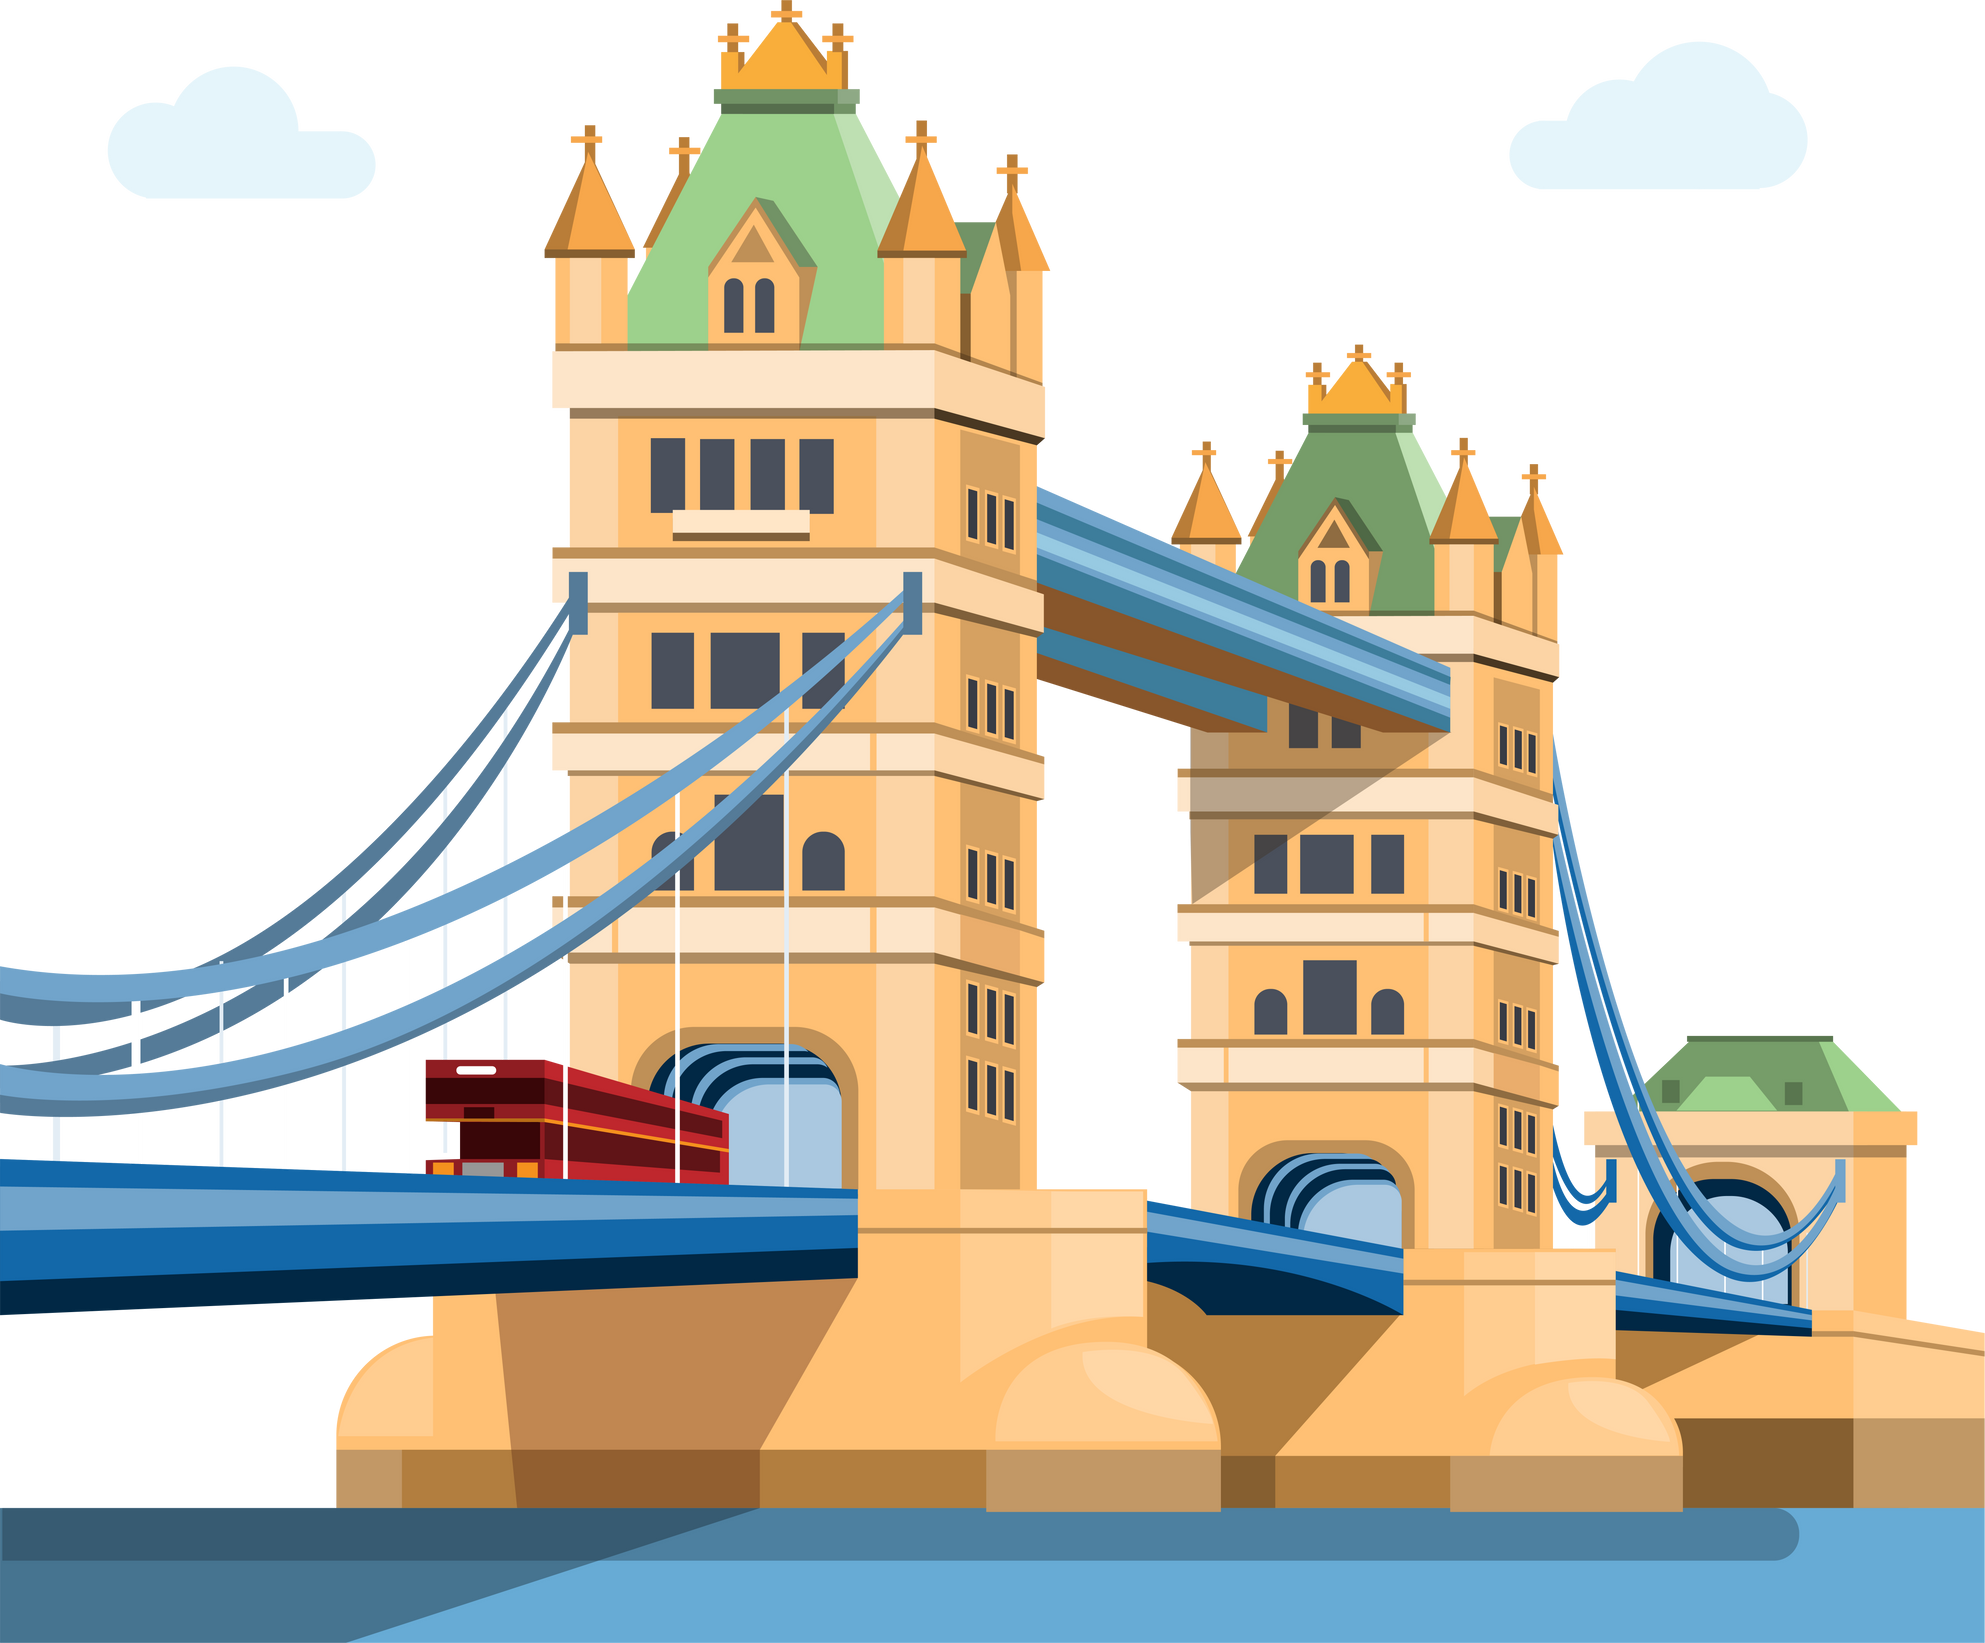 London Tower Bridge across the river thames famous landmark building